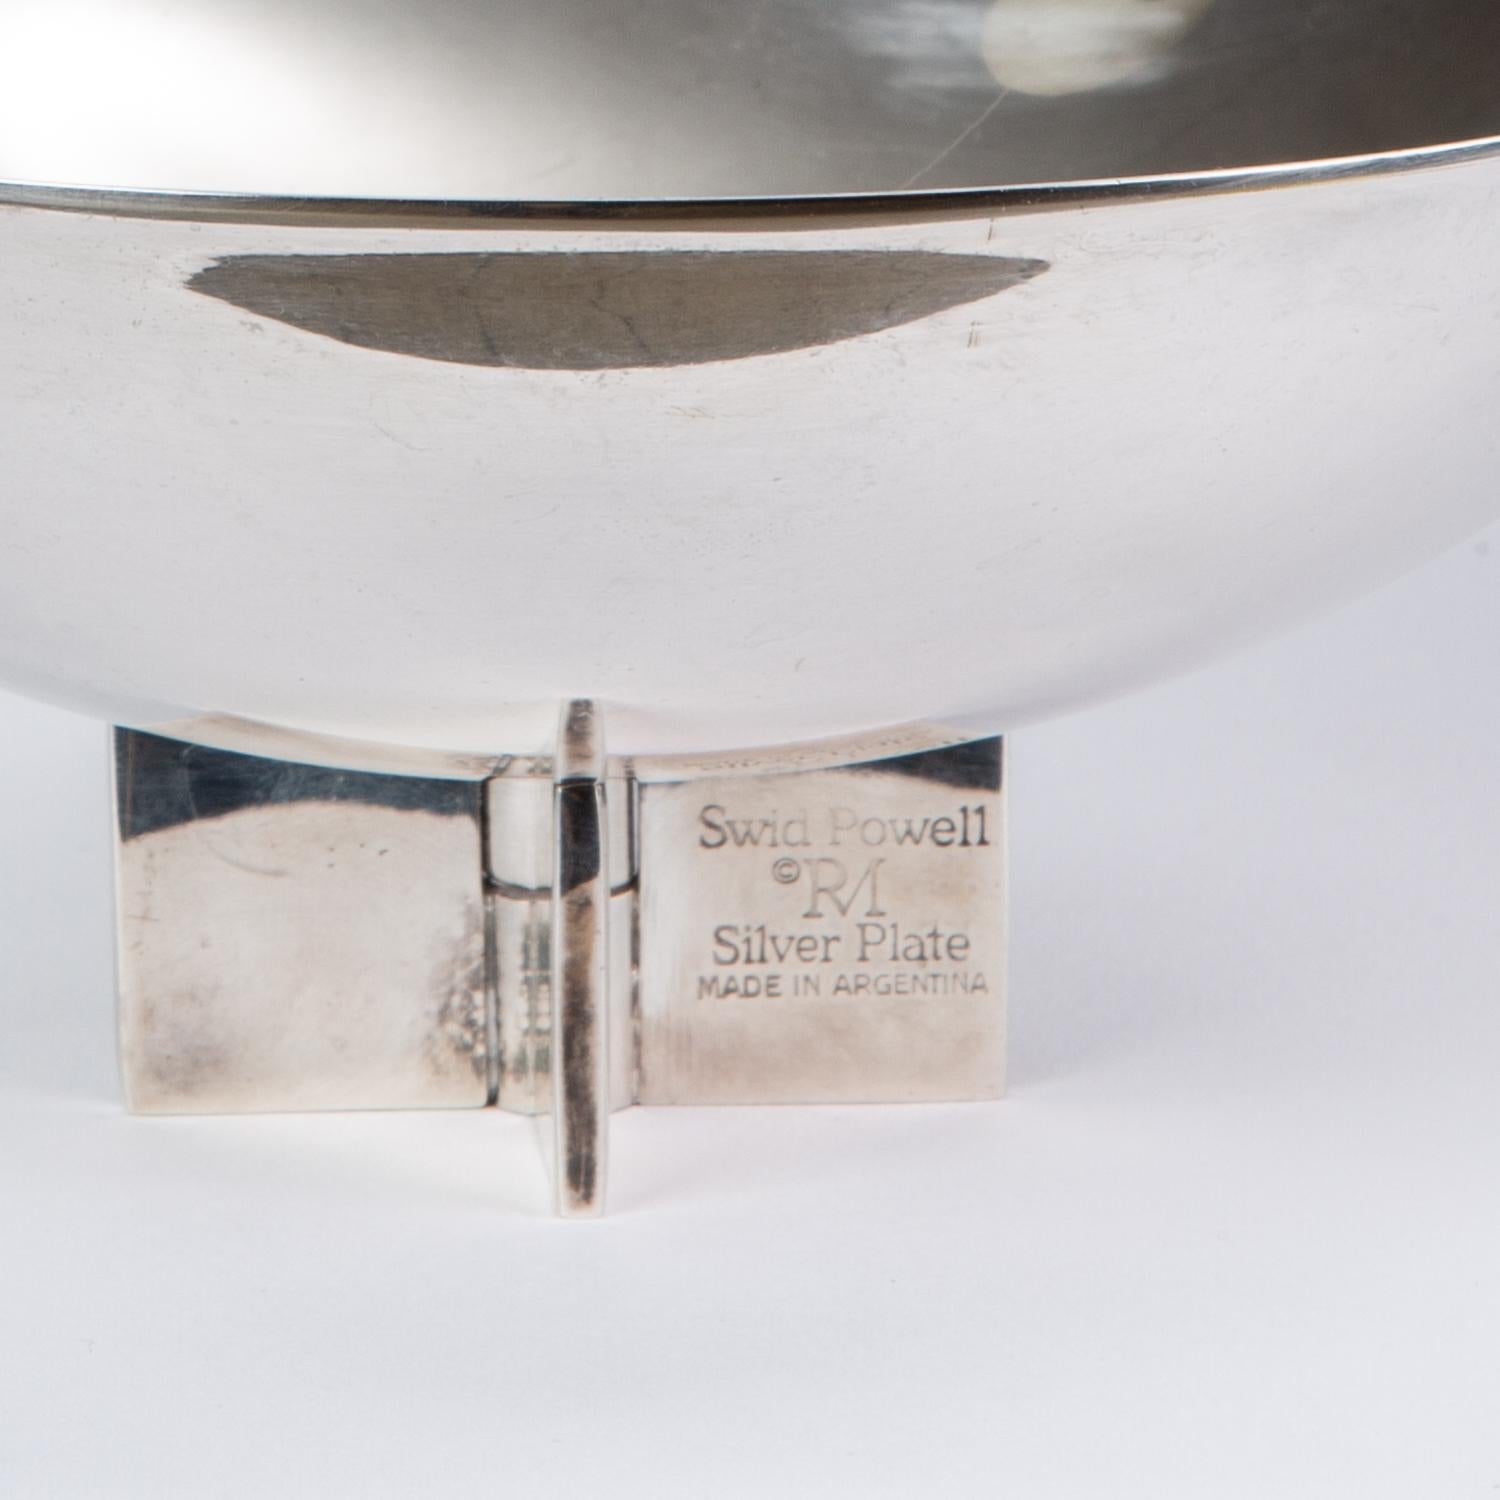 Silver Plate Postmodern Silver Bowl by Richard Meier for Swid Powell